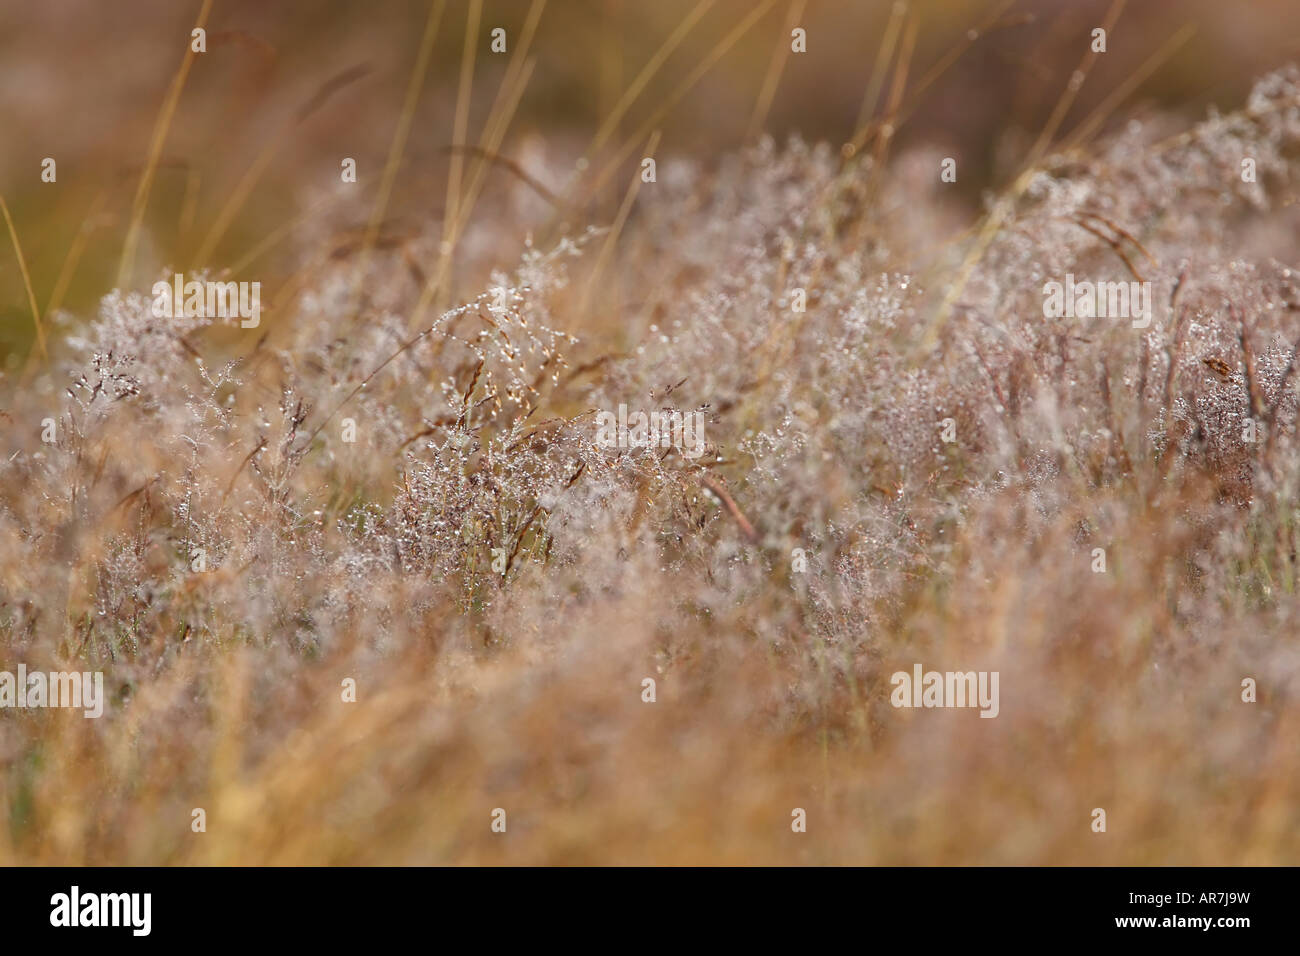 Jewel like dew drops hanging on grass stems Stock Photo